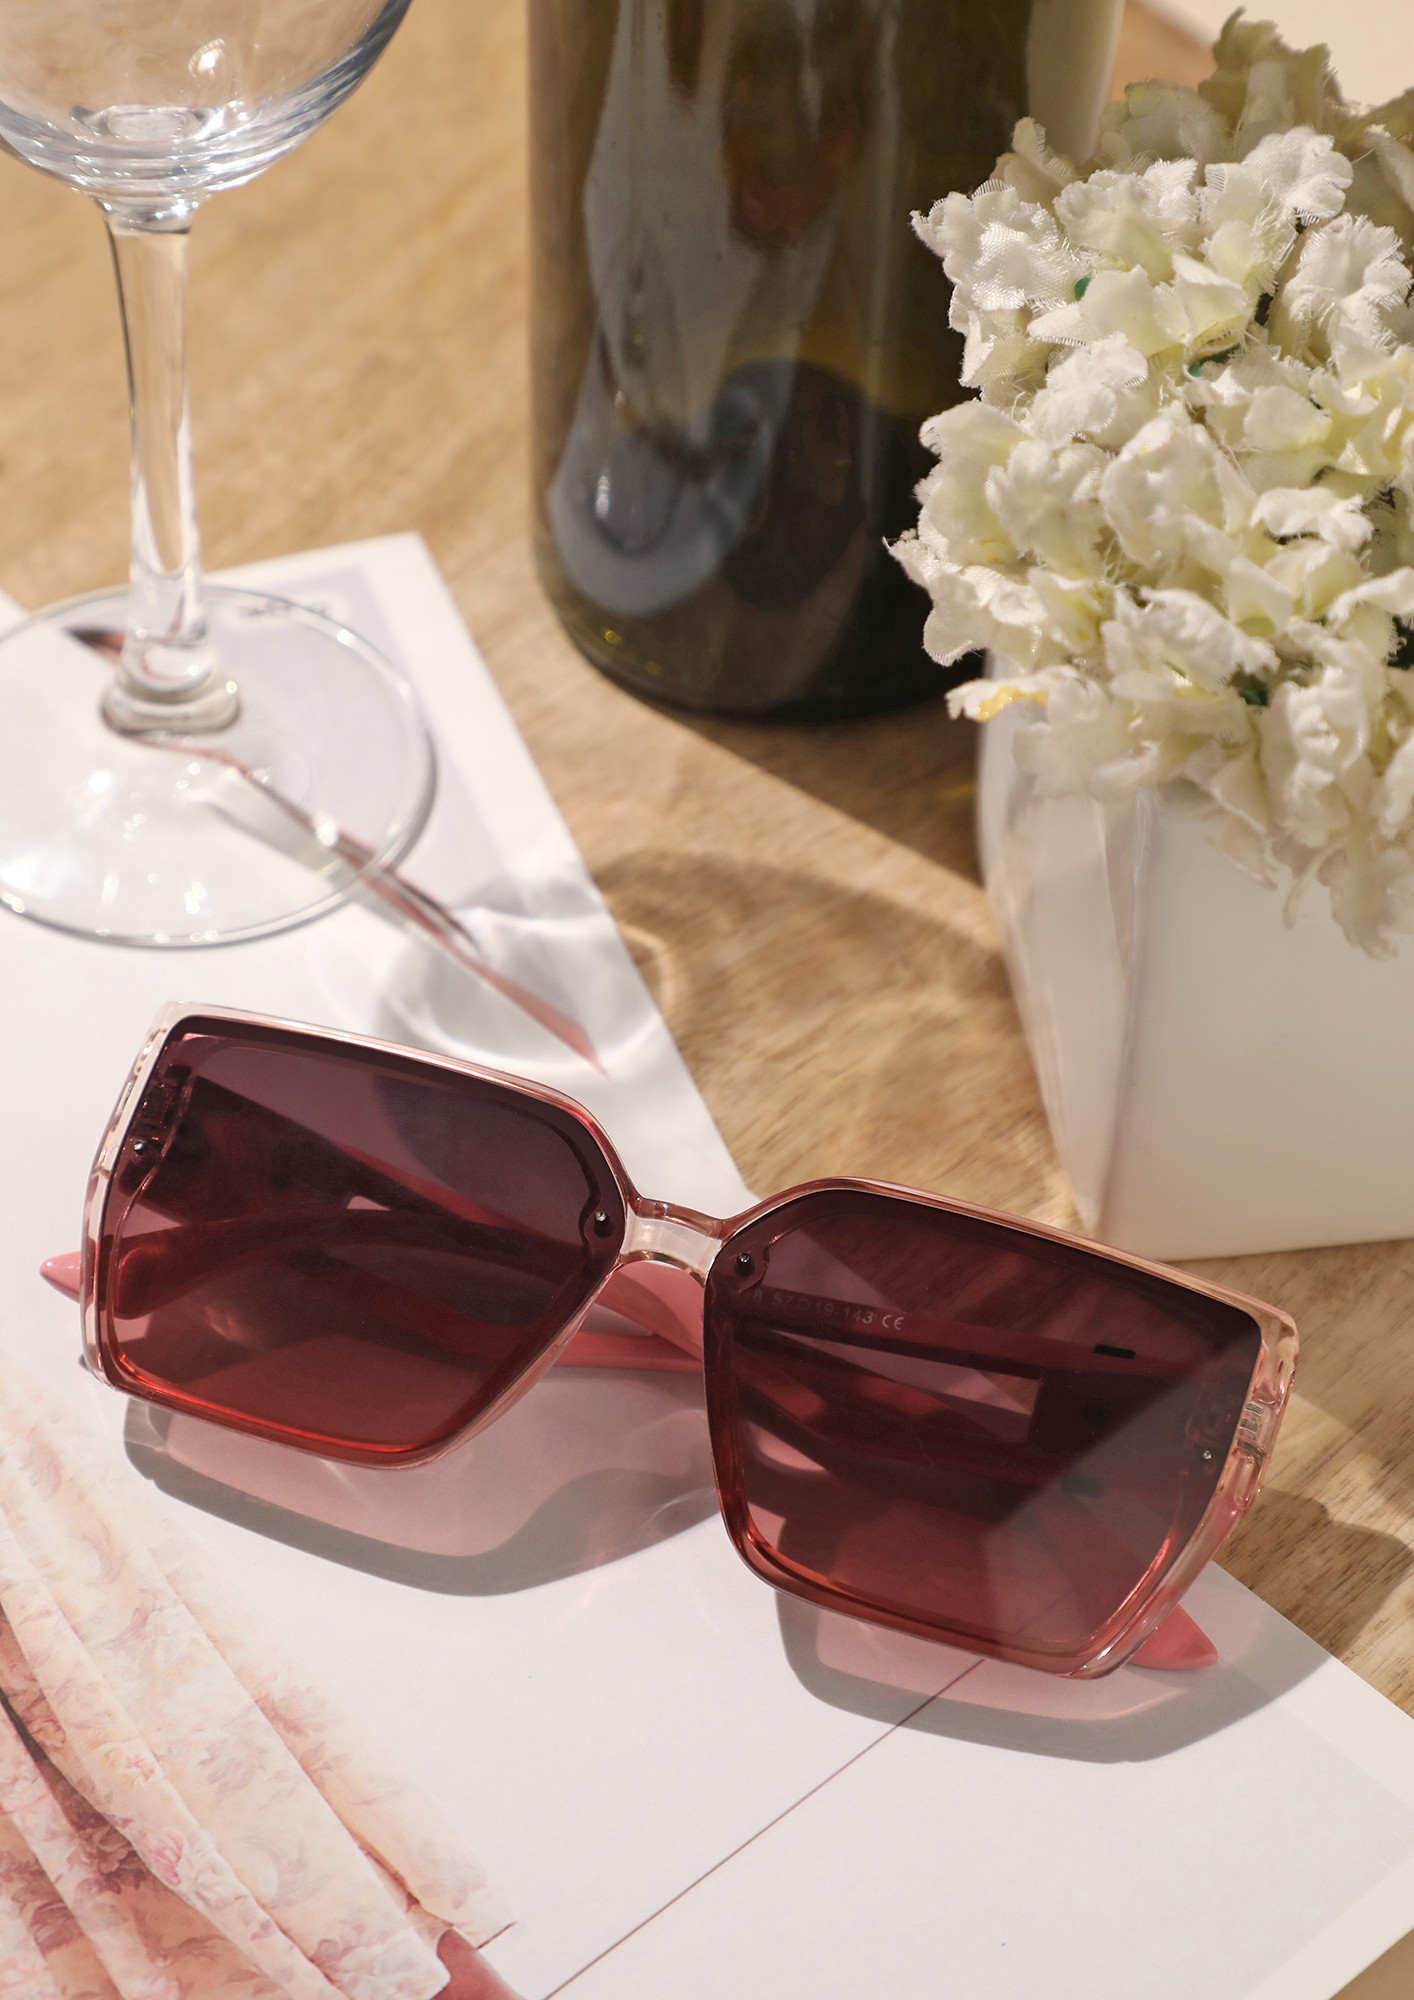 Louis Vuitton Glass Sunglasses for Women